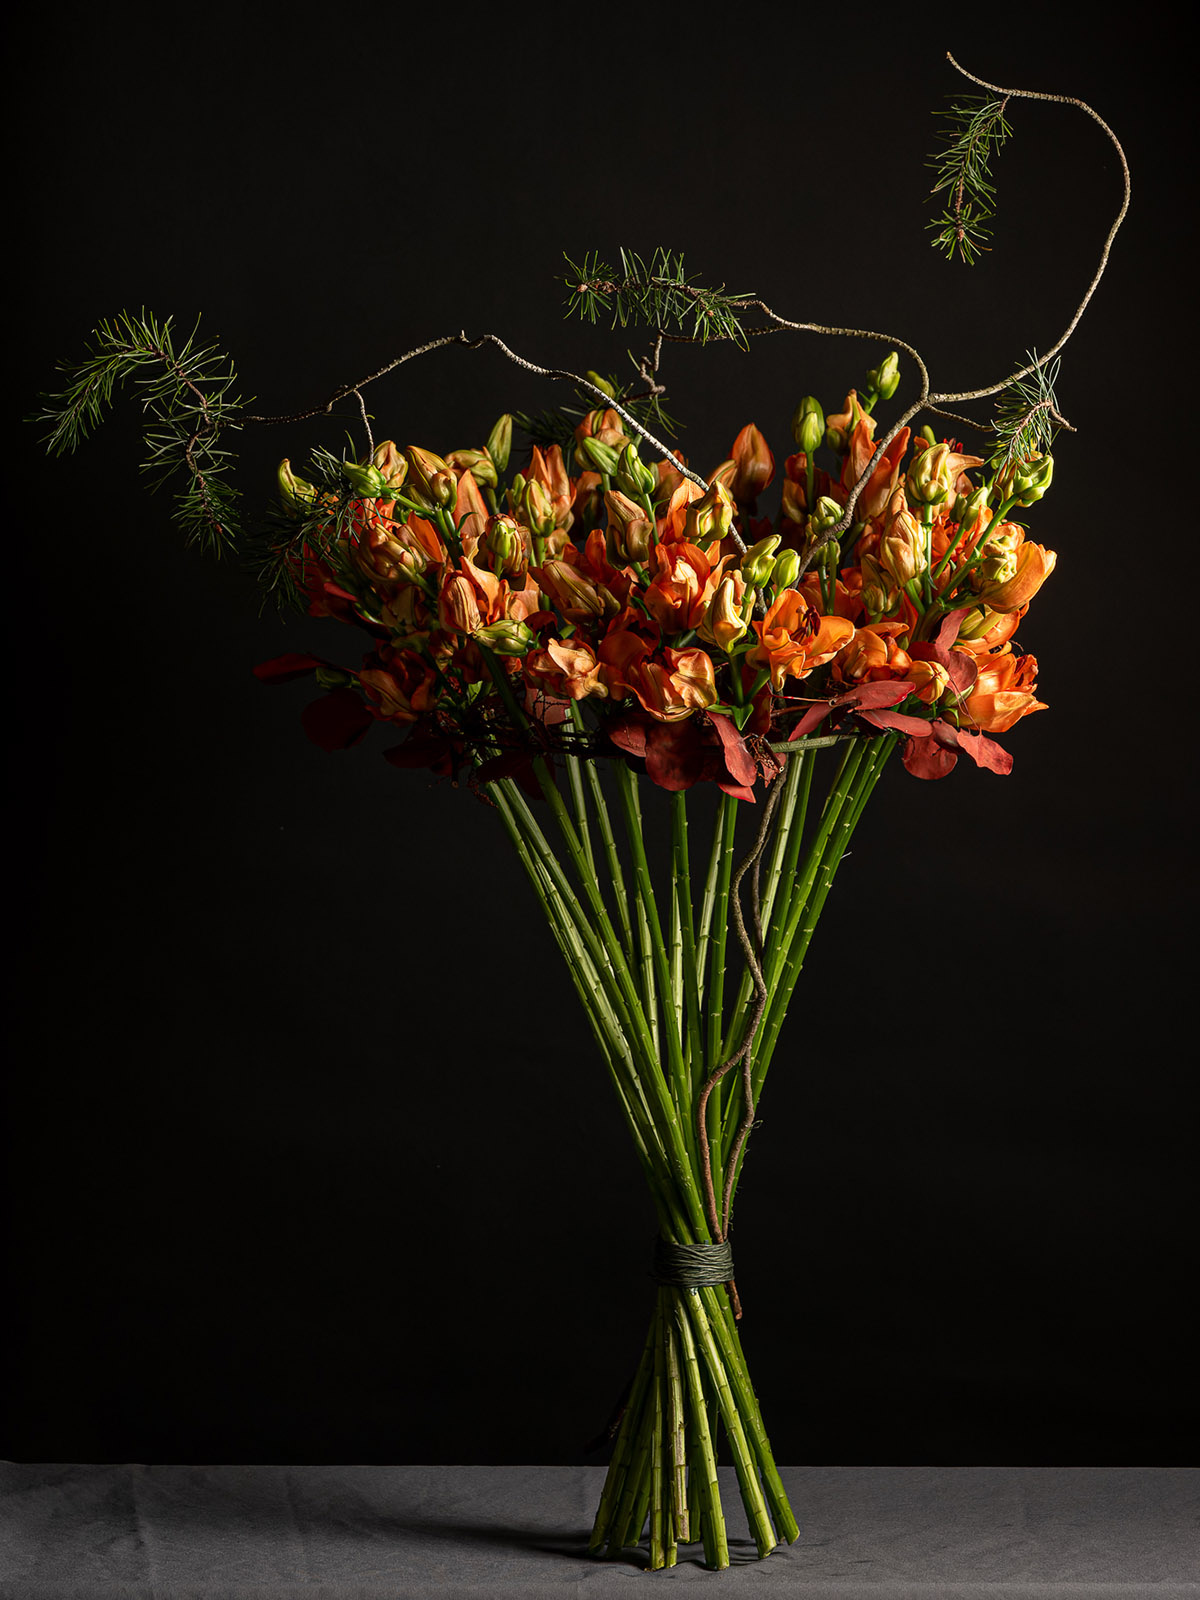 Lily Tintoretto bouquet by Zbigniew Dziwulski on Thursd